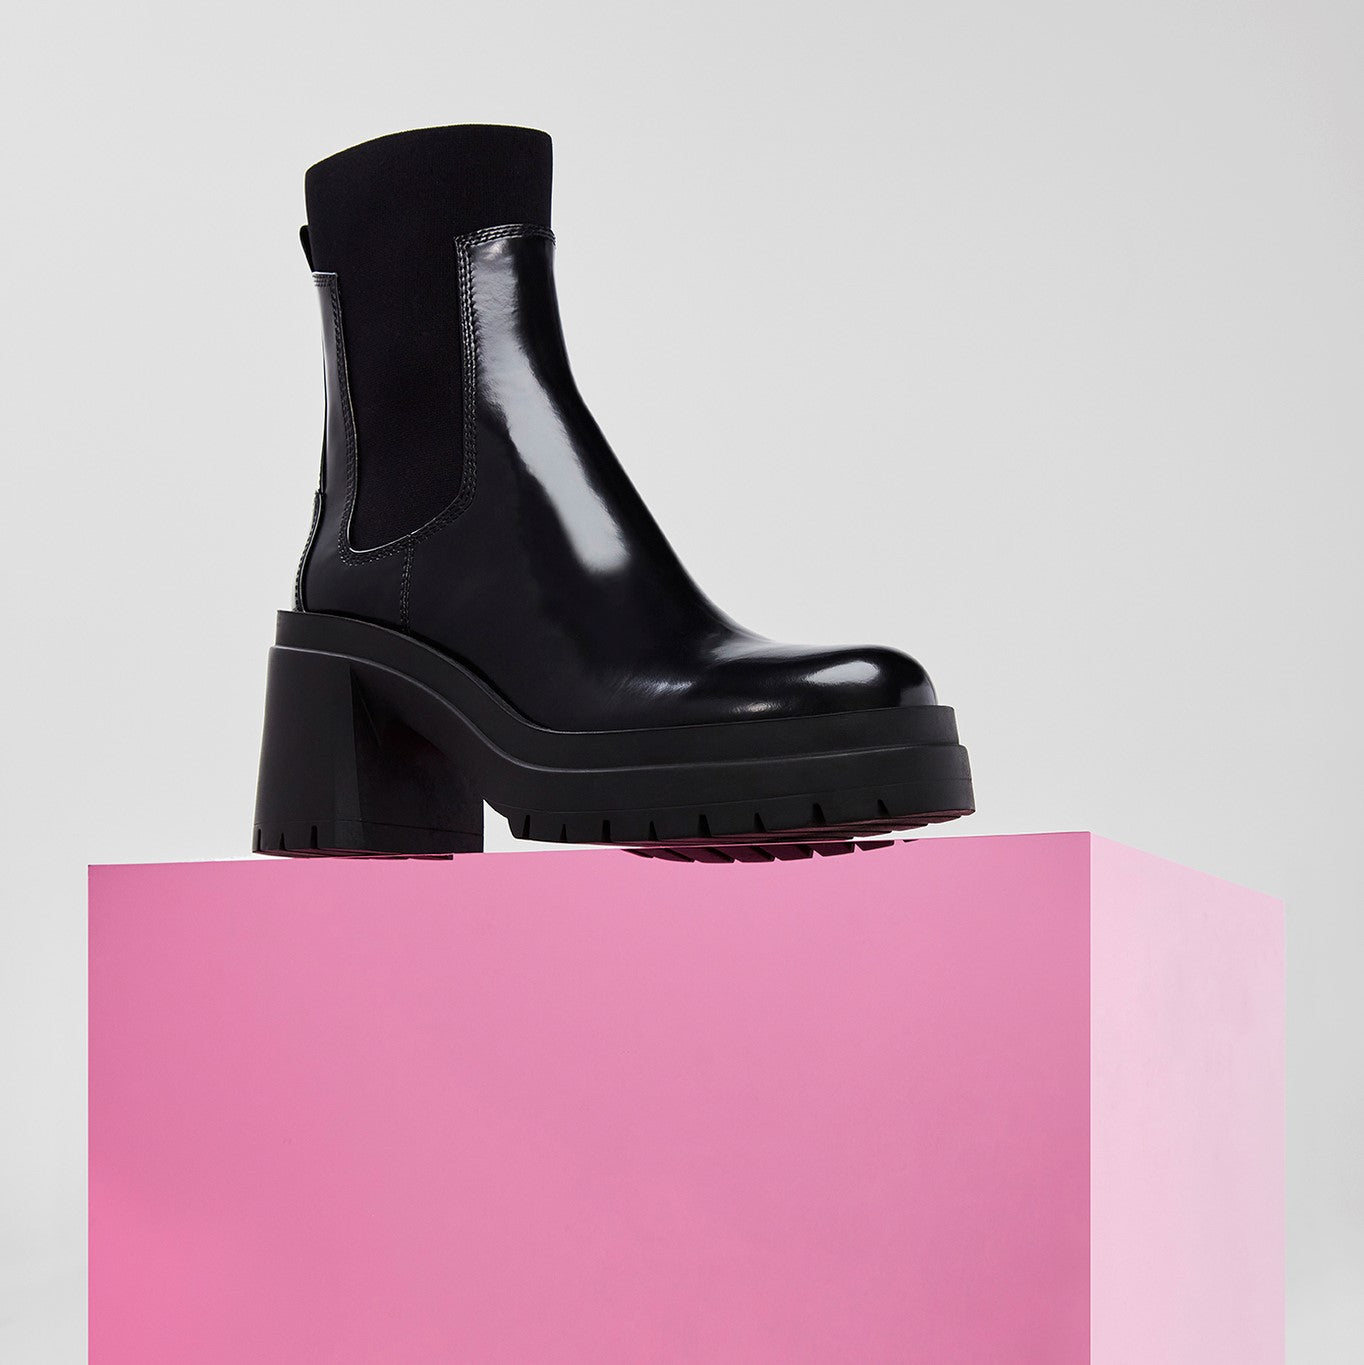 Aldo Women’s Chelsea Boots Bigmood (Black)